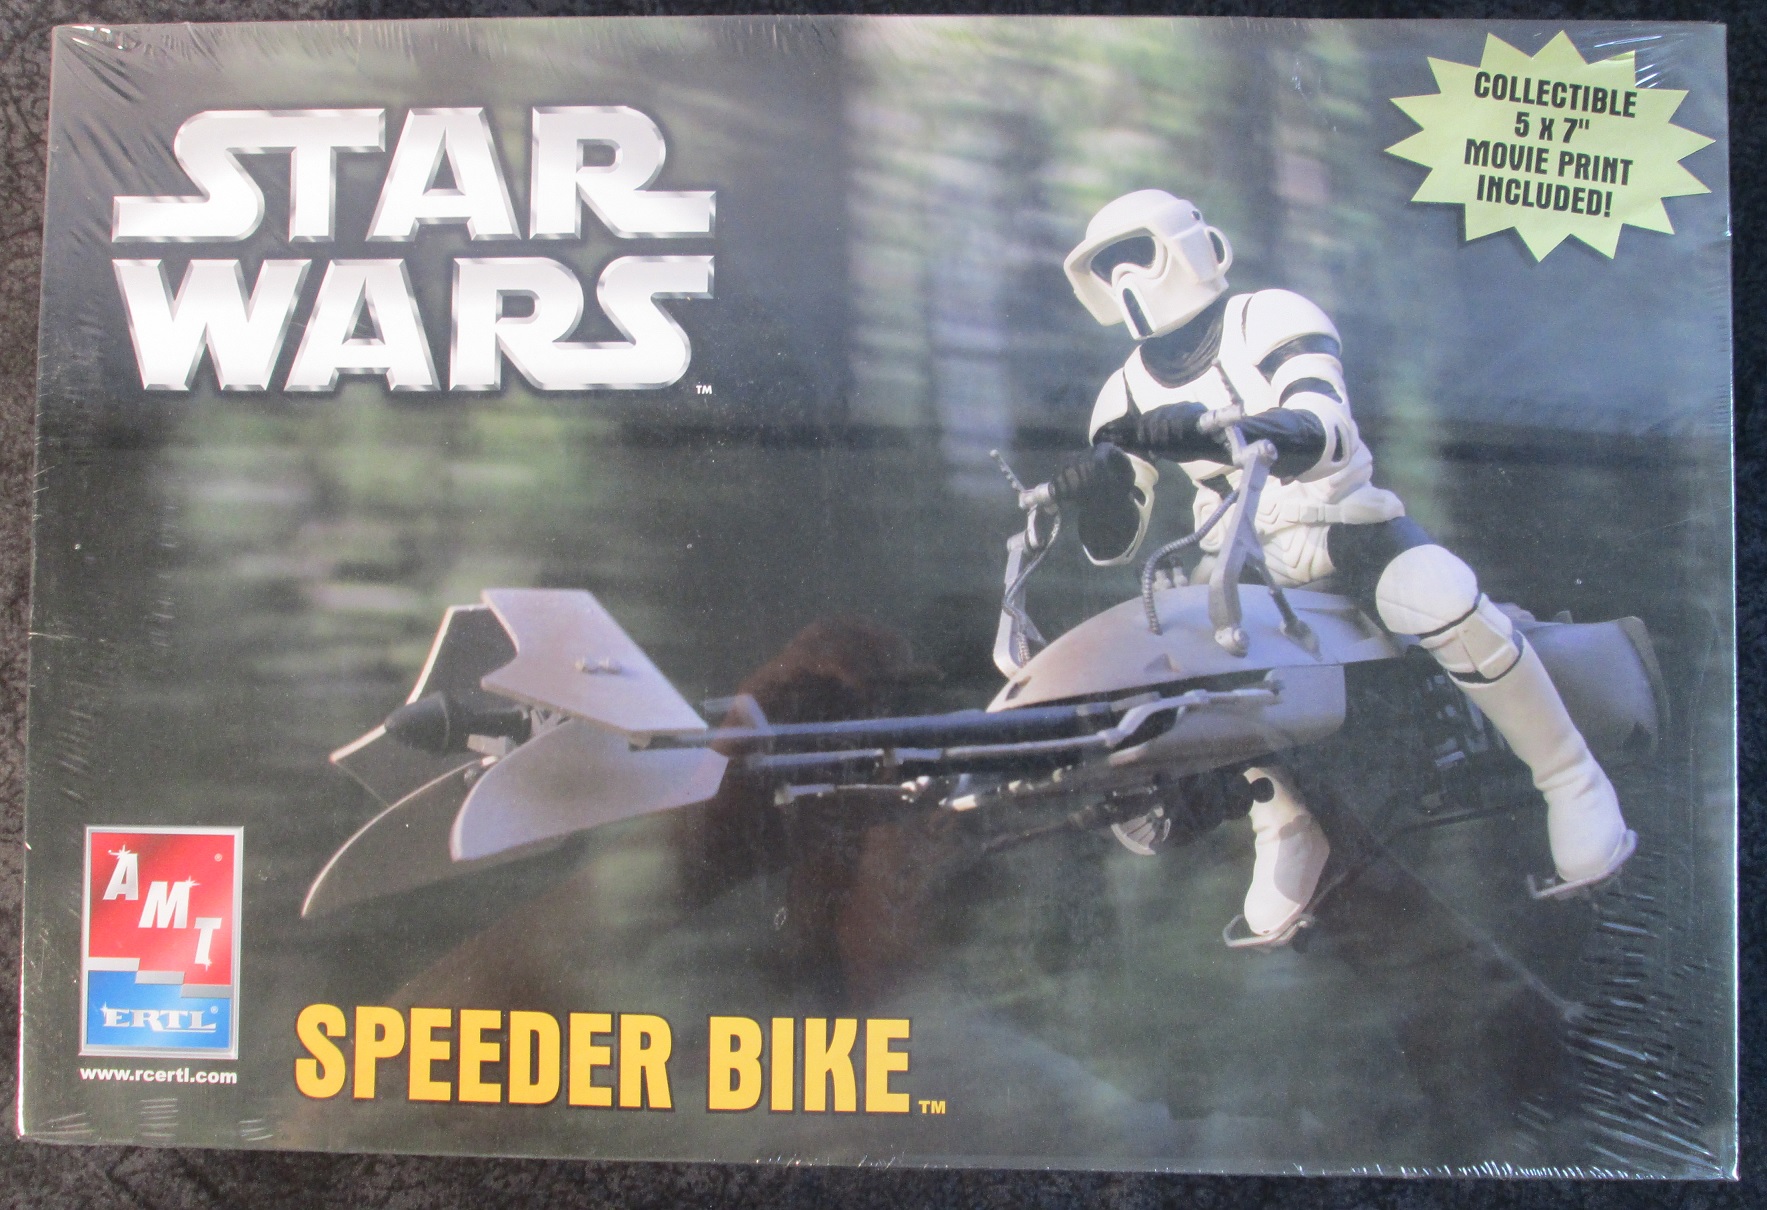 DeAgostini Star Wars Starships & Vehicles Collection Imperial Speeder Bike #11 